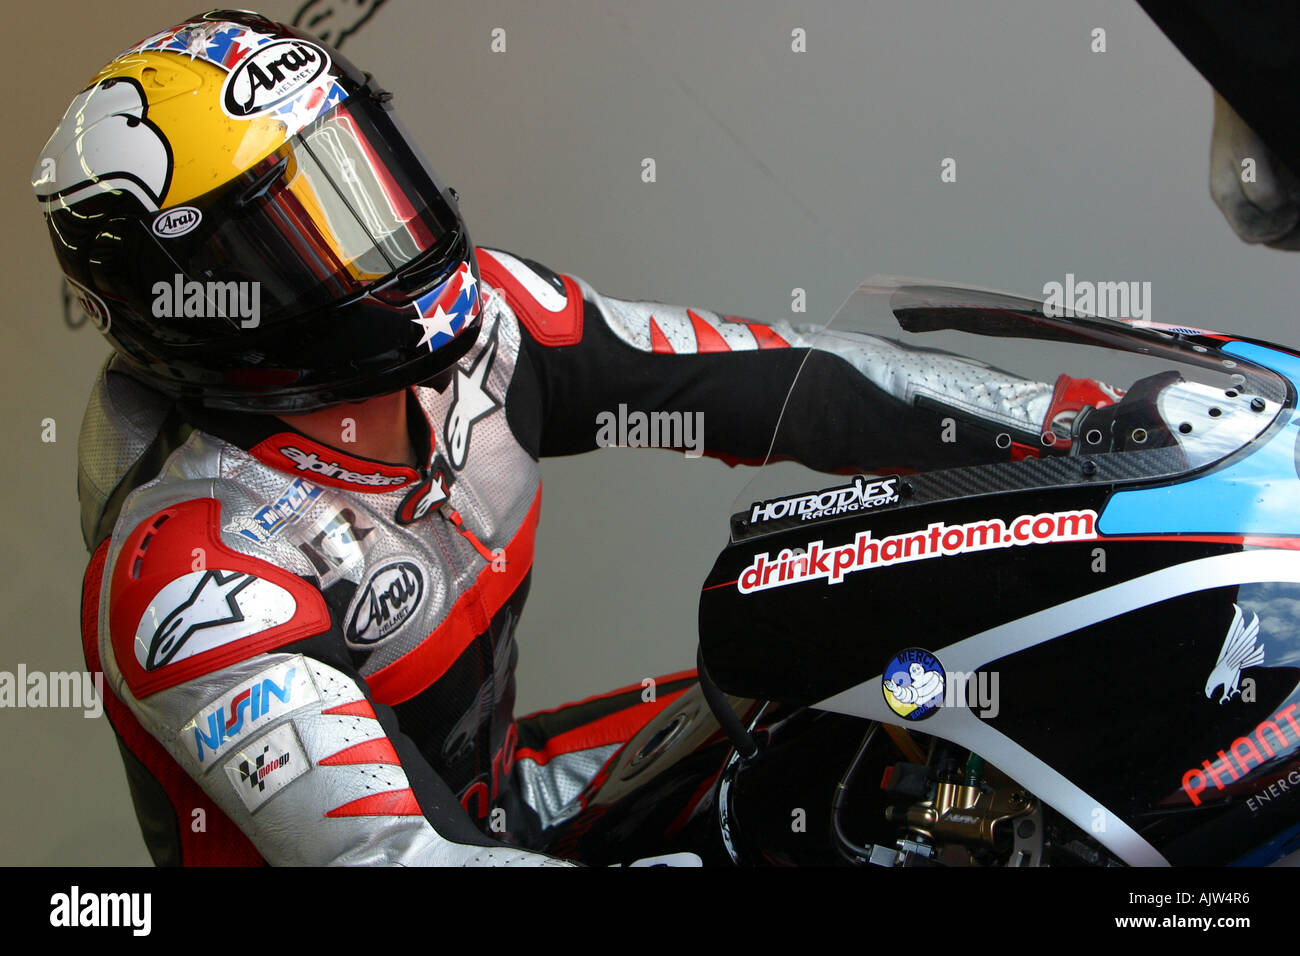 Kenny Roberts junior american motogp rider 2000 500cc GP World Champion  Stock Photo - Alamy